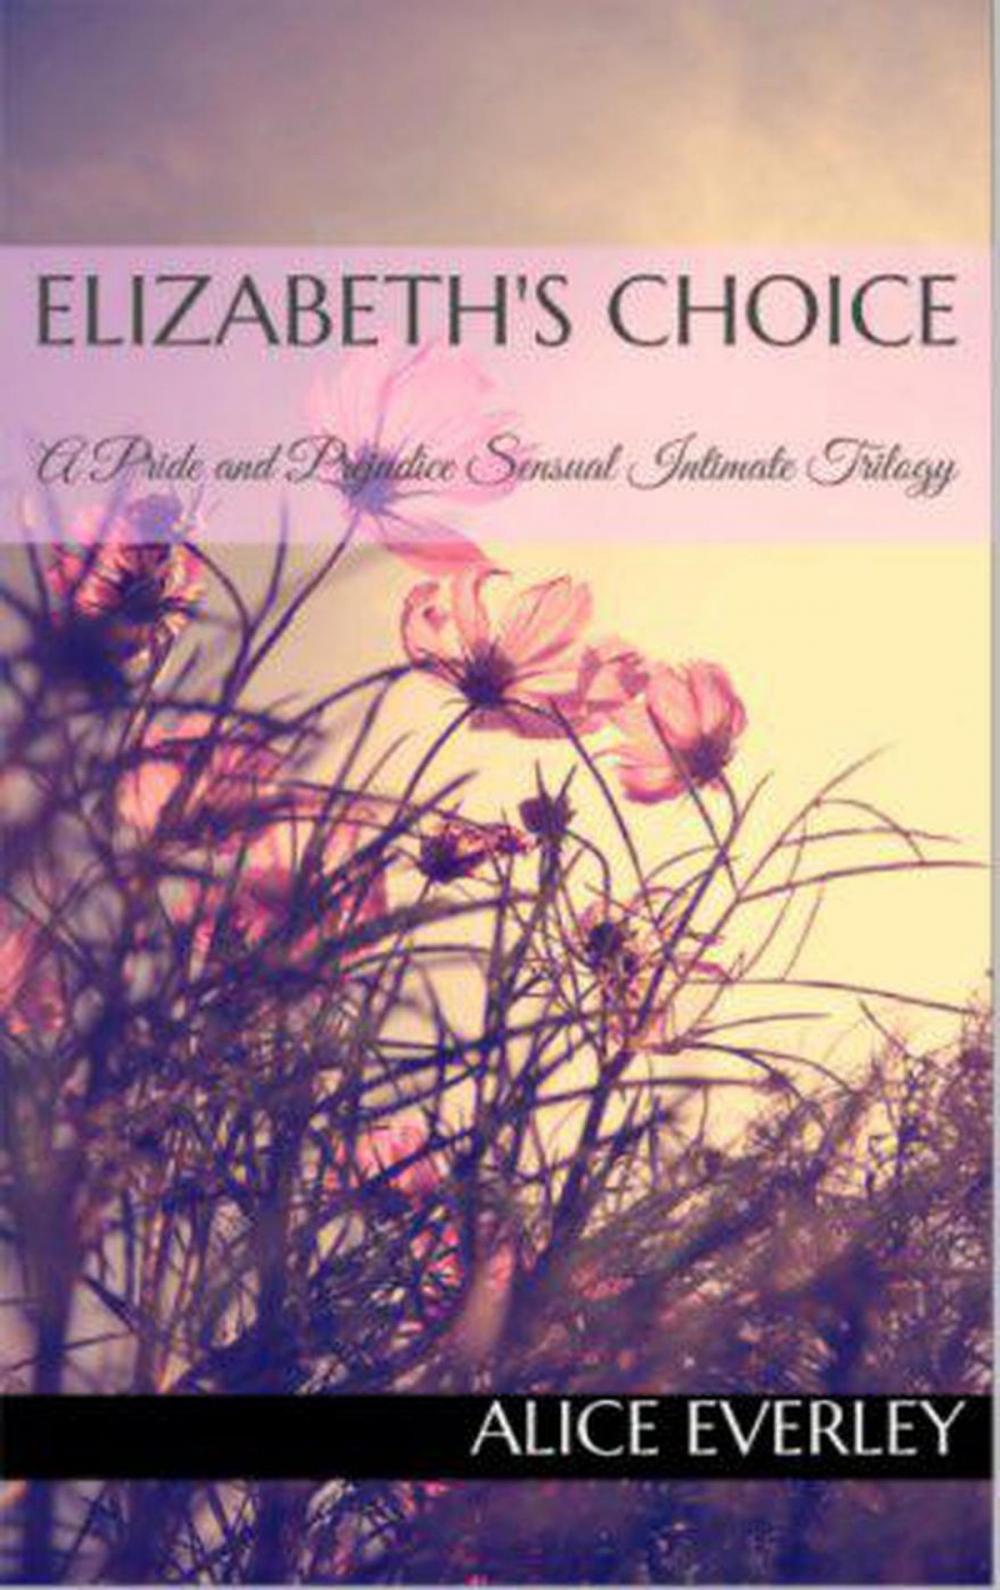 Big bigCover of Elizabeth's Choice: A Pride and Prejudice Sensual Intimate Trilogy